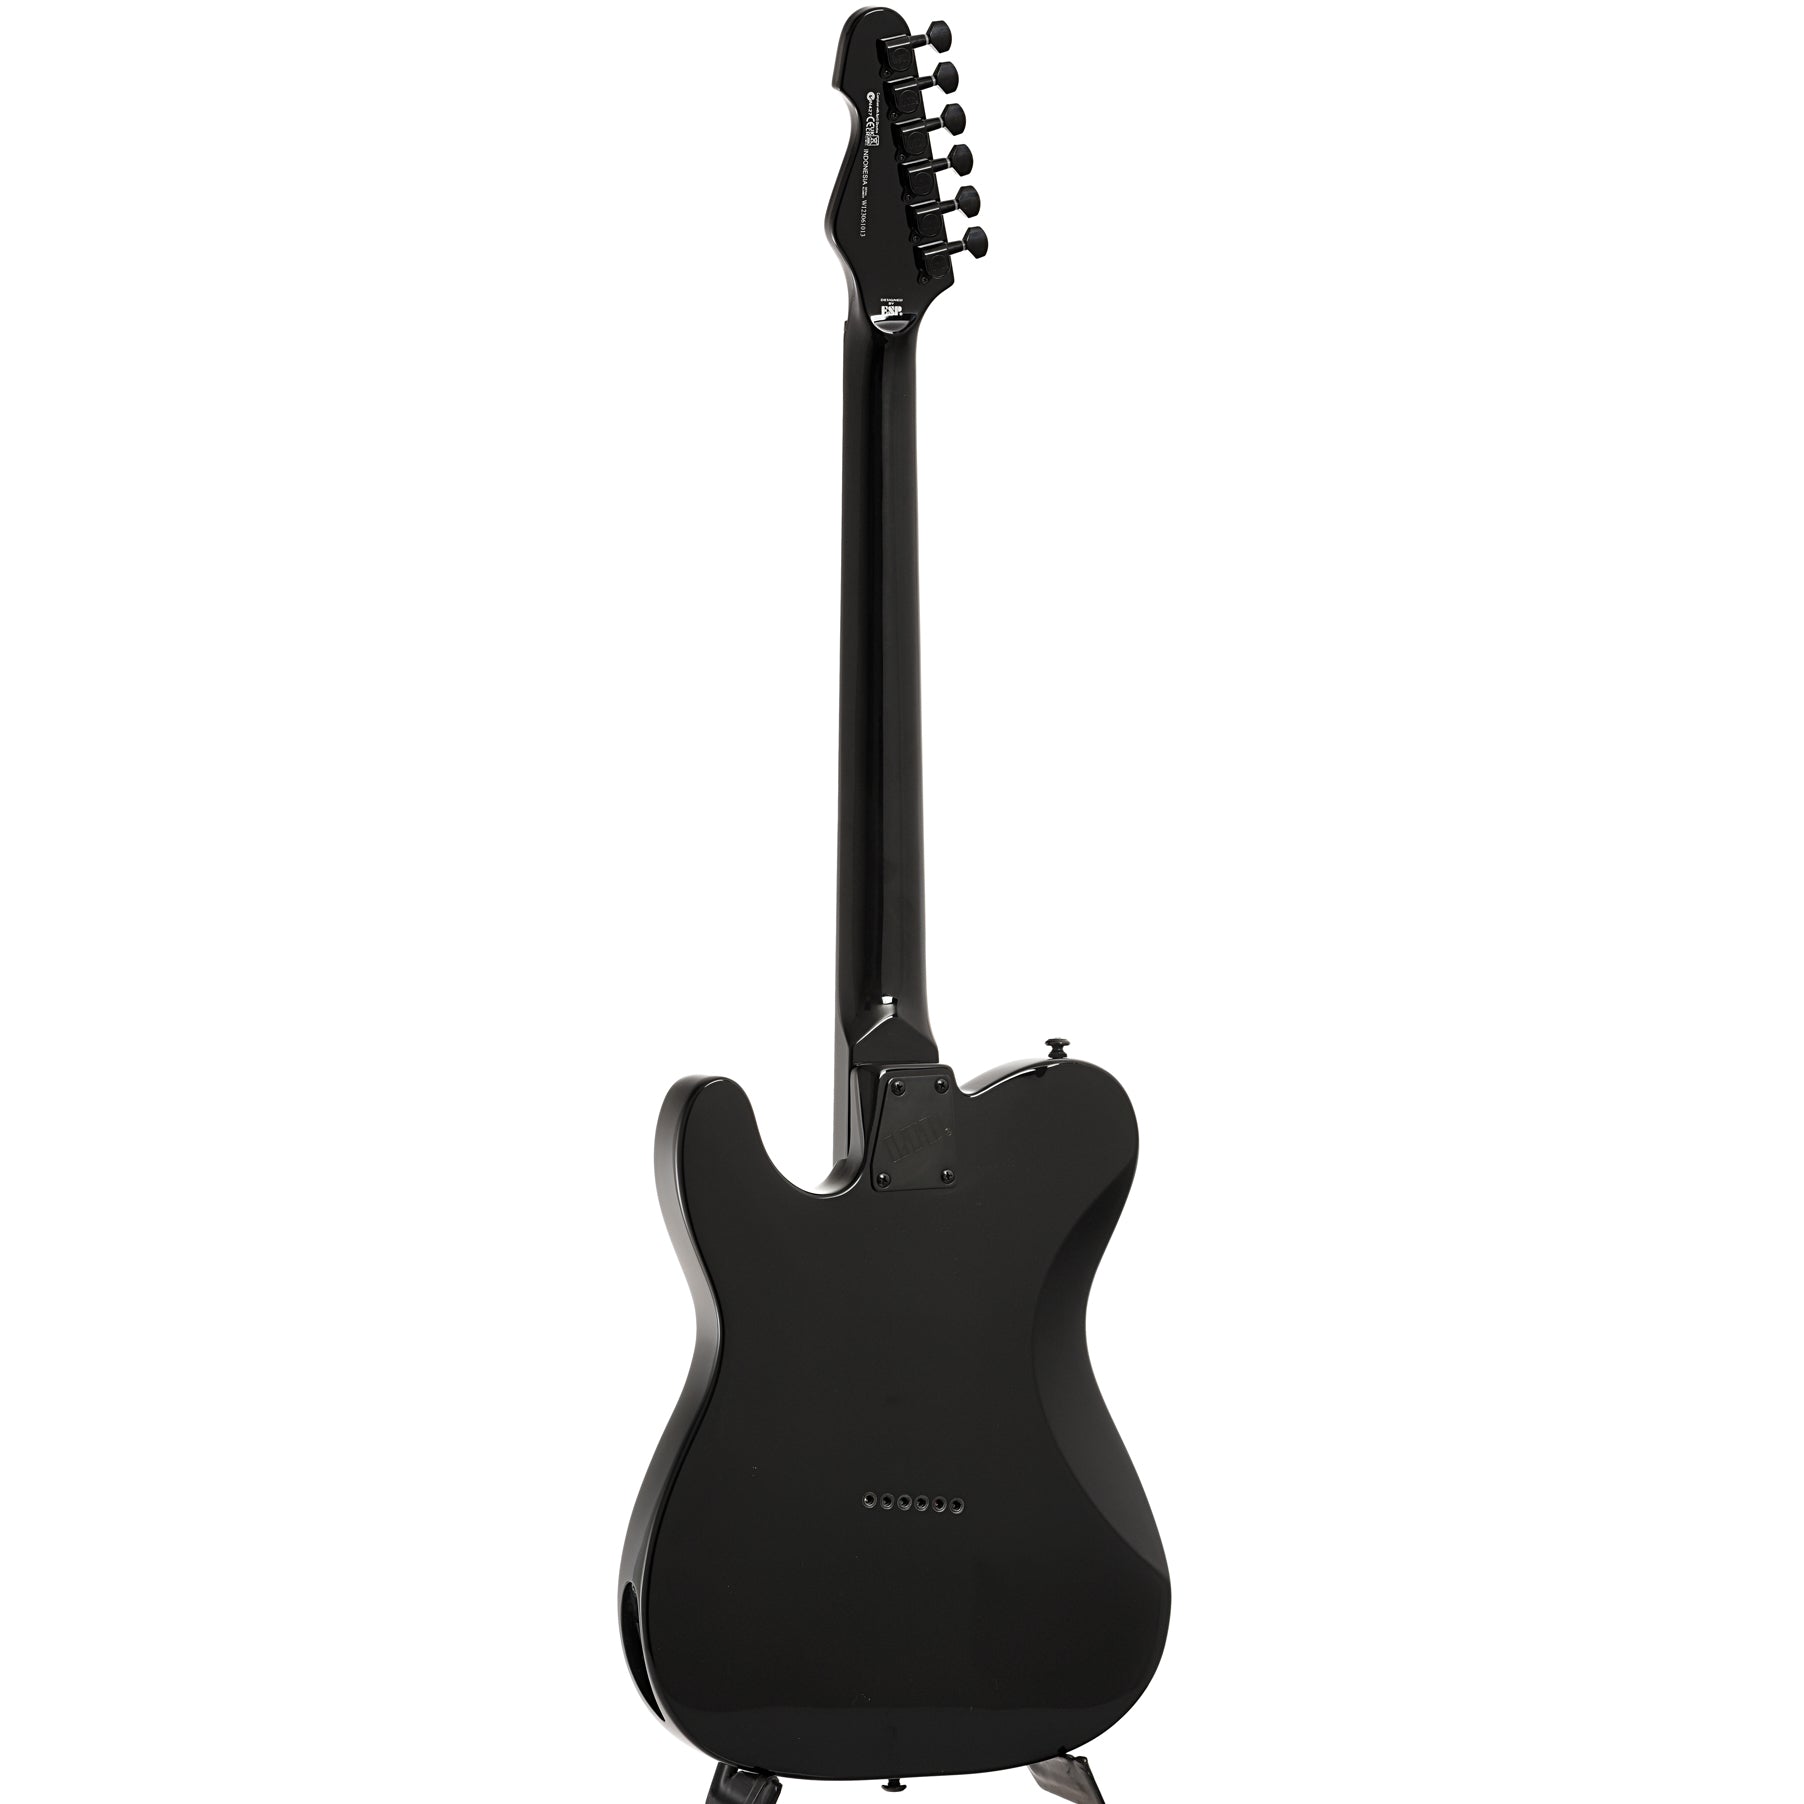 Full back and side of ESP LTD TE-200 Electric Guitar Black Finish